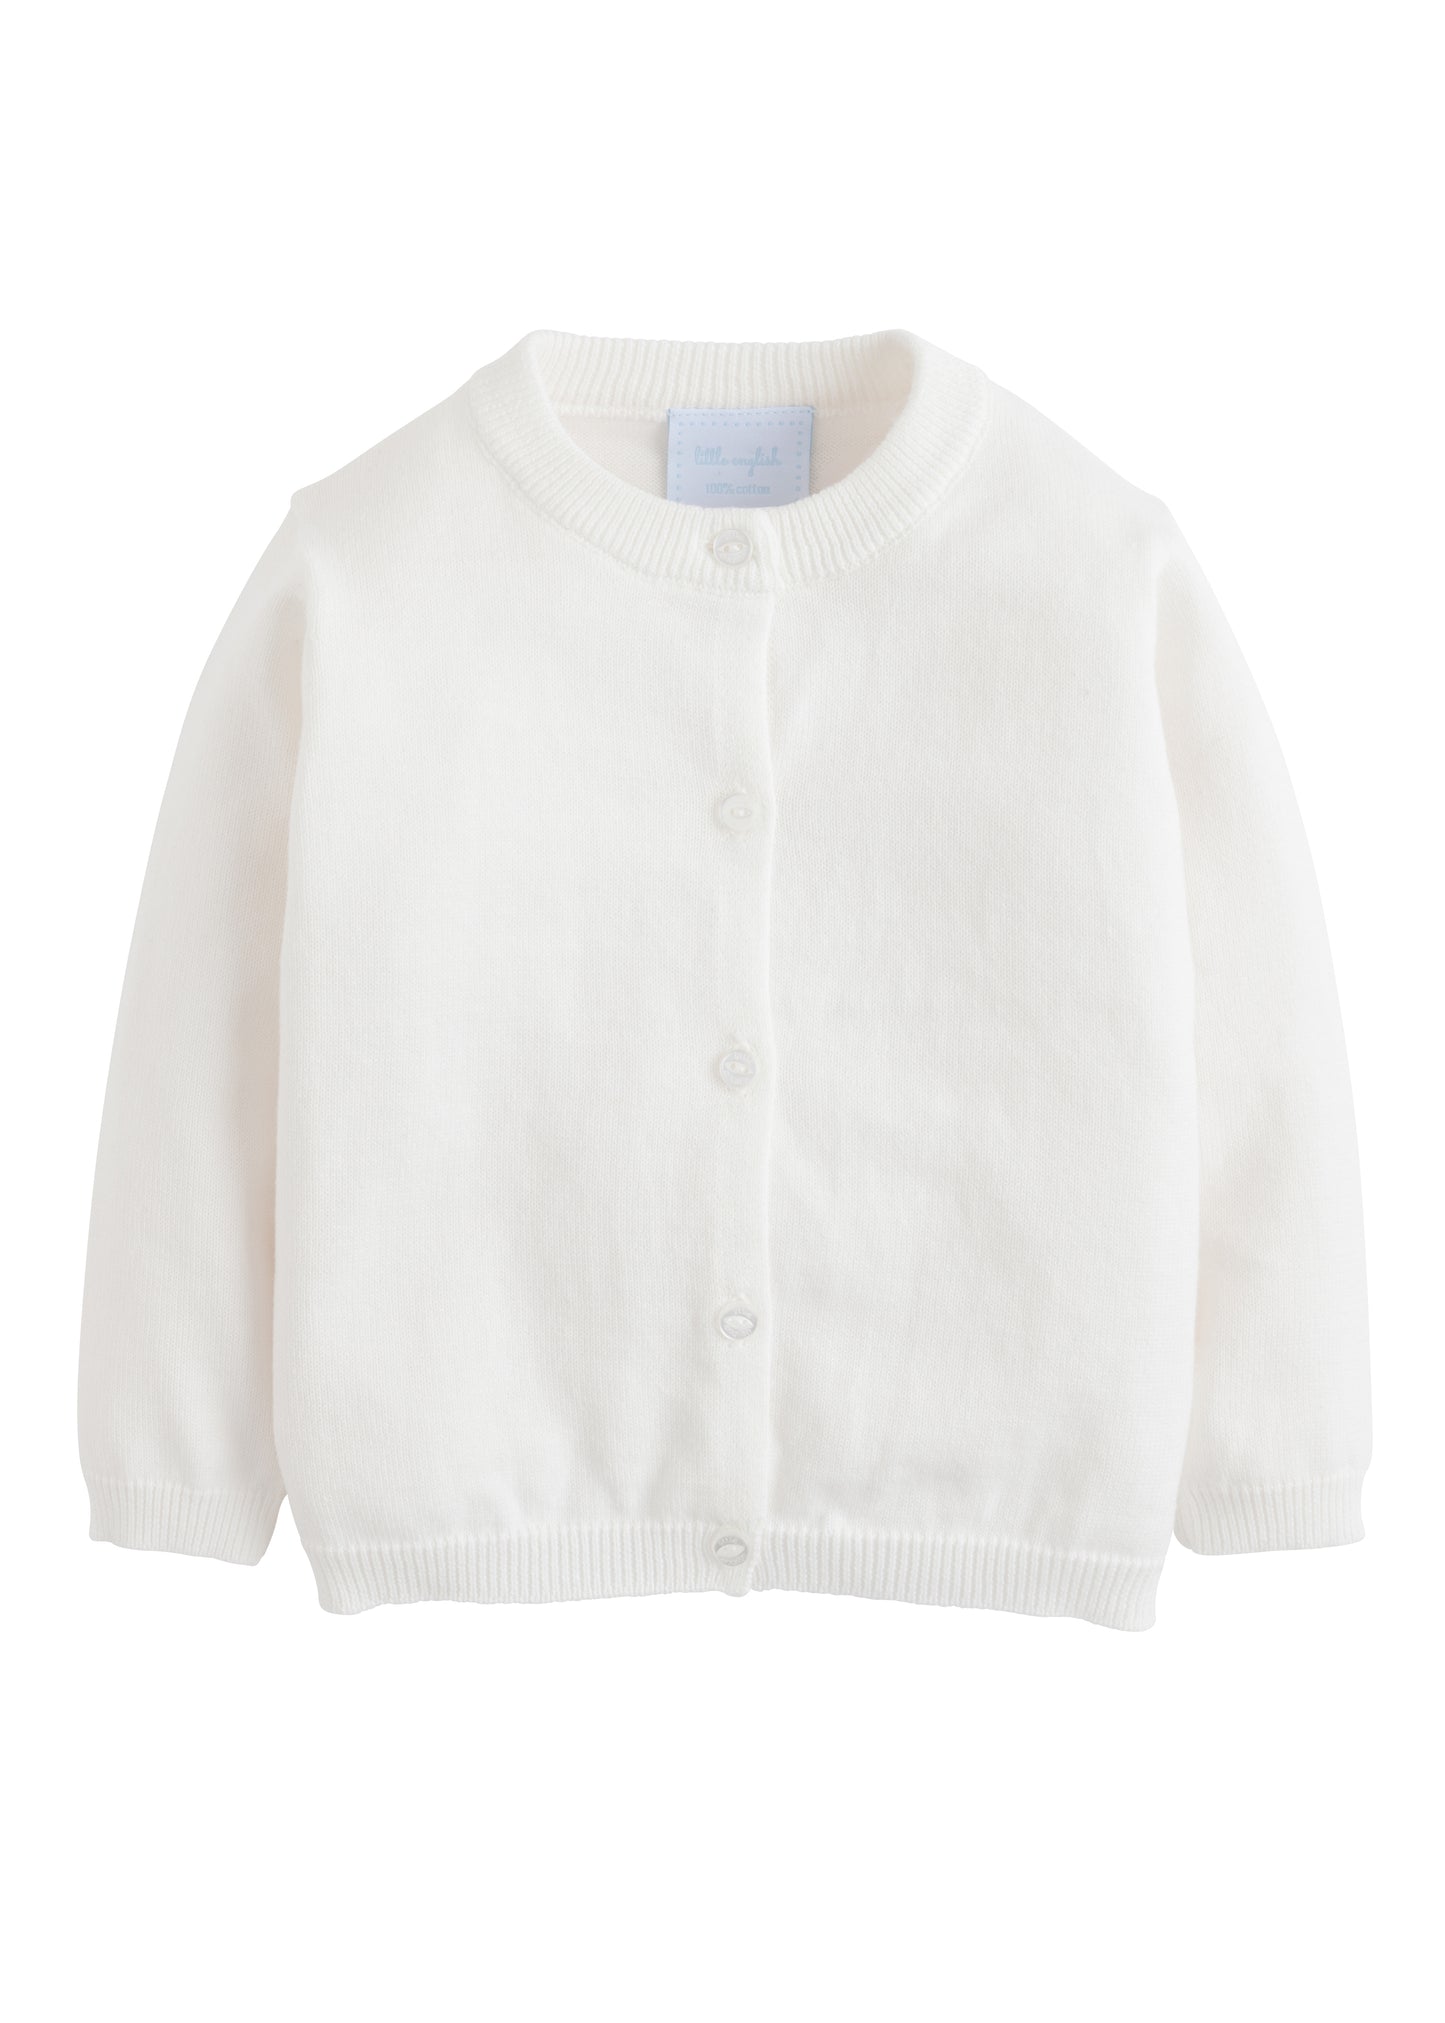 Little English Children's Clothing Essential Cardigan - White